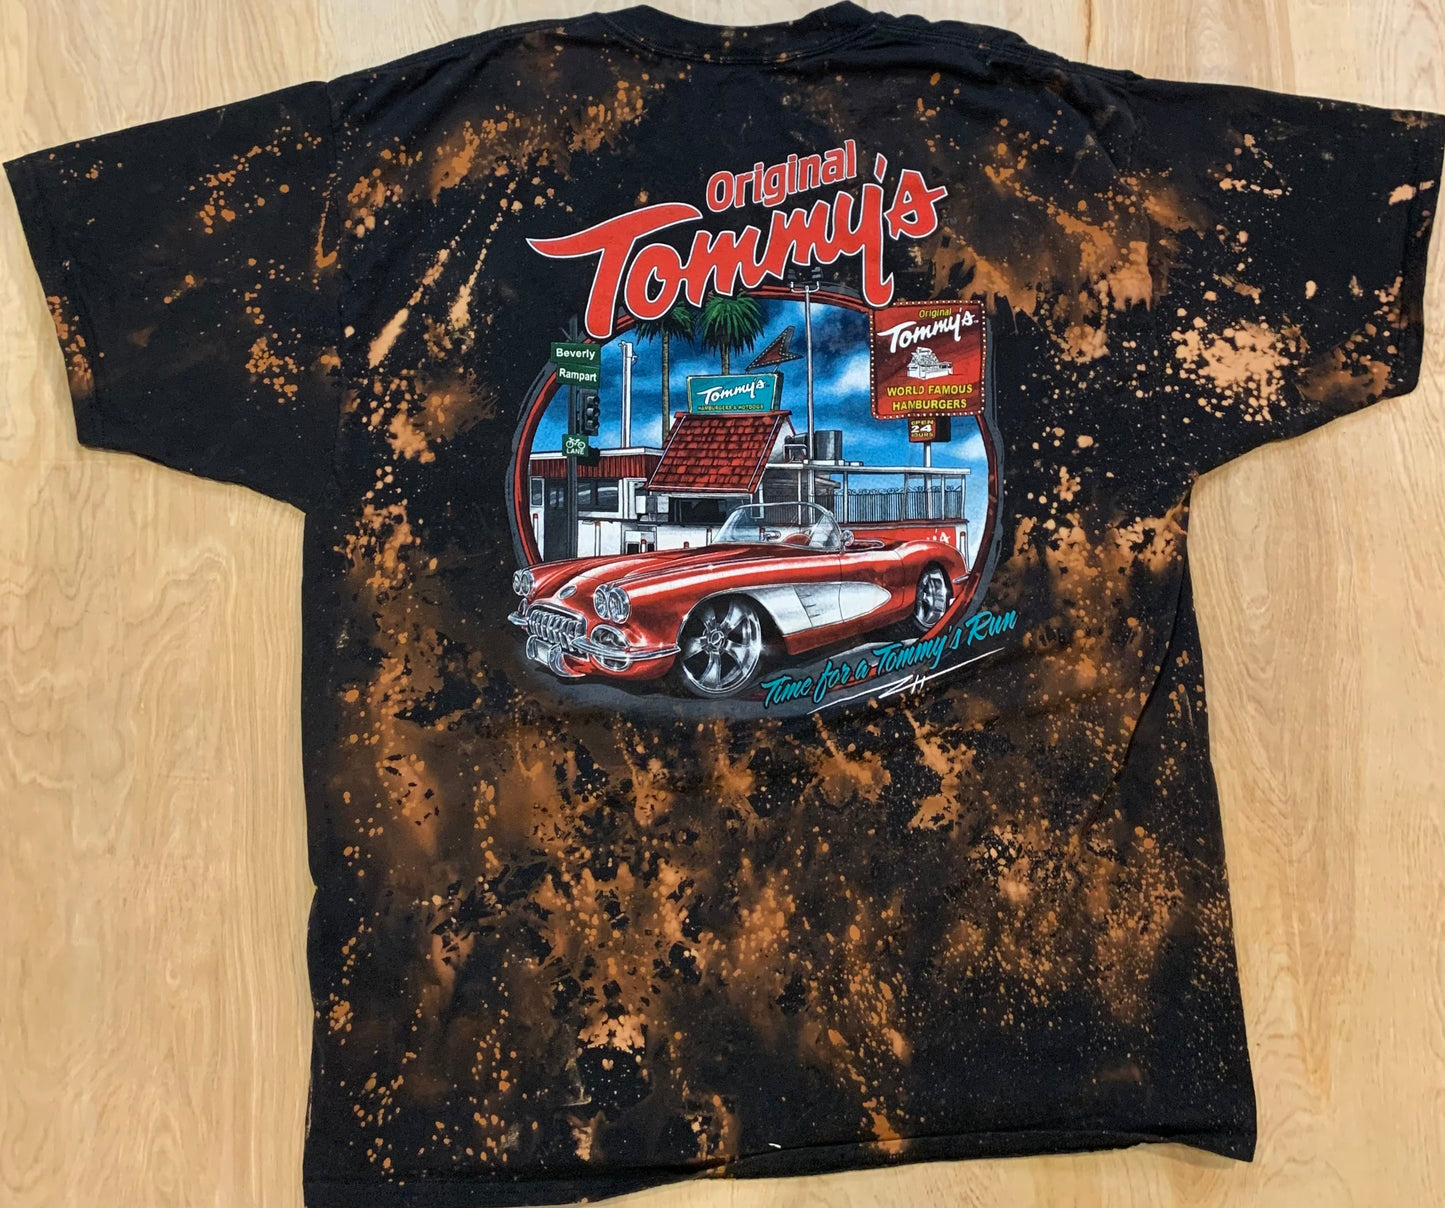 Original Tommys T-shirt